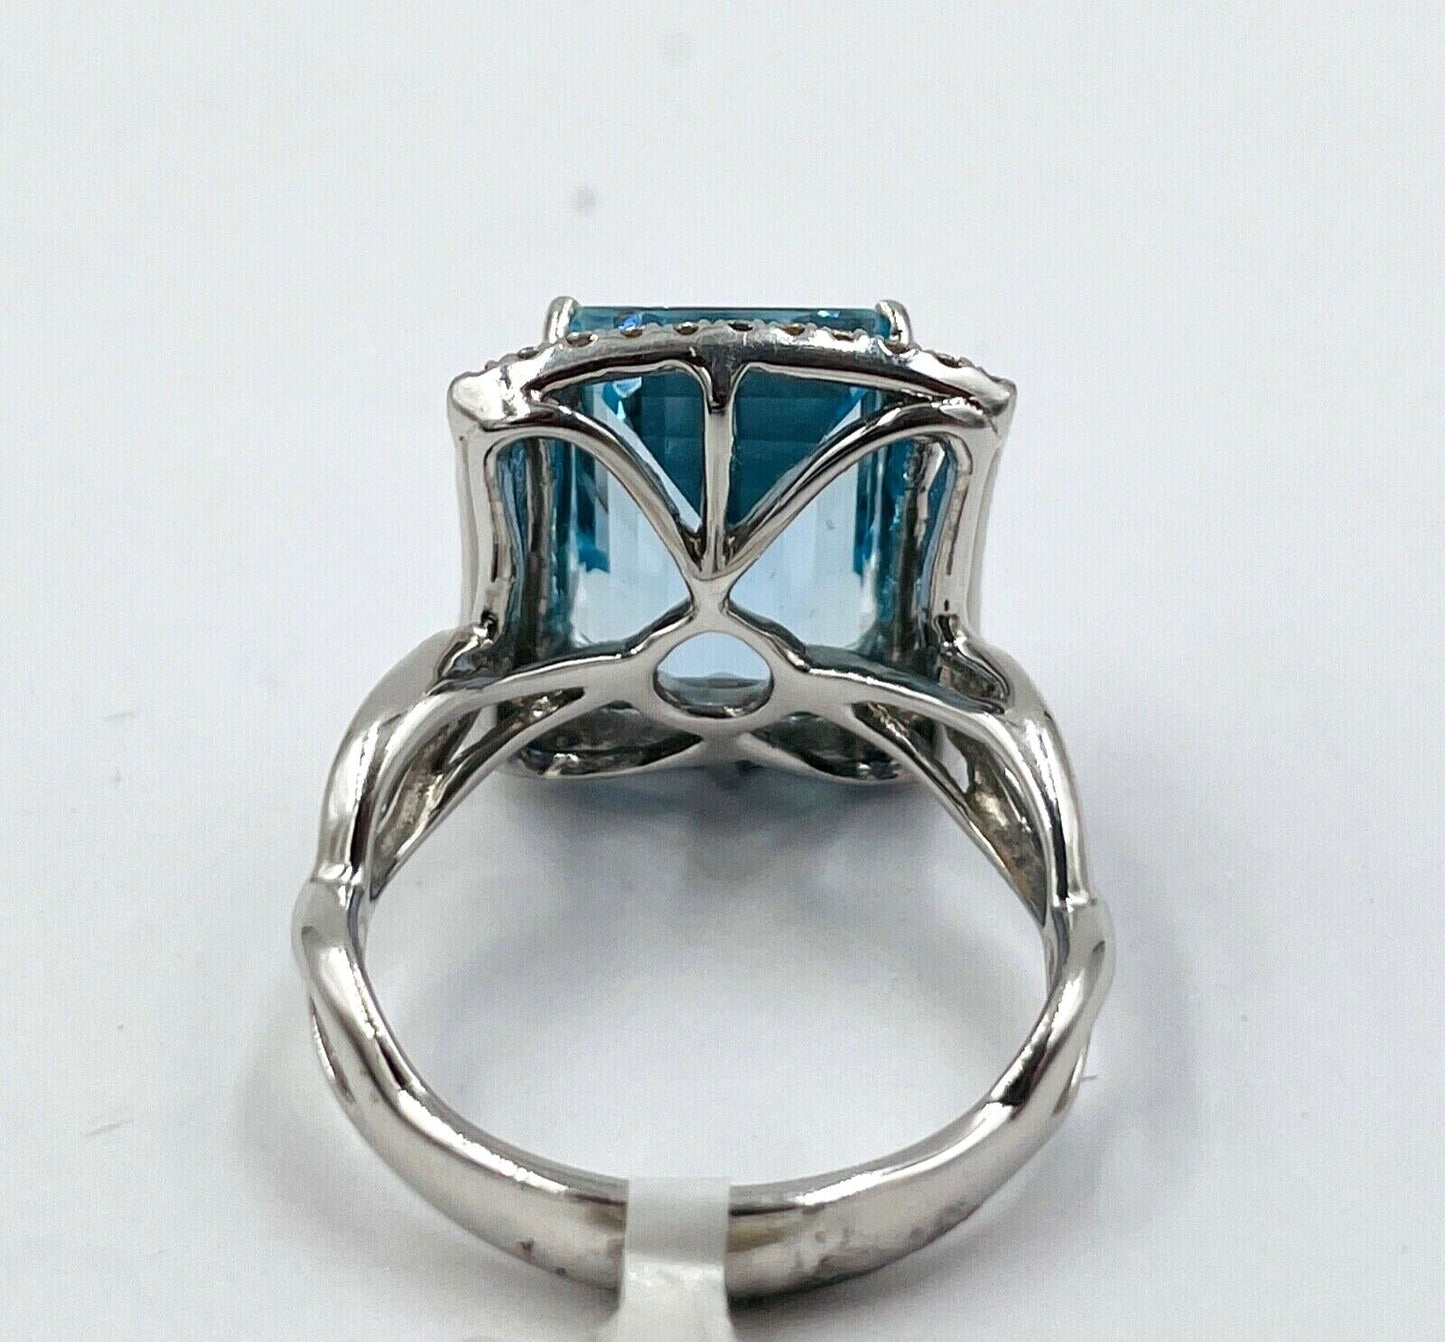 Stunning 5.94ct Aquamarine with diamond double halo Cocktail ring